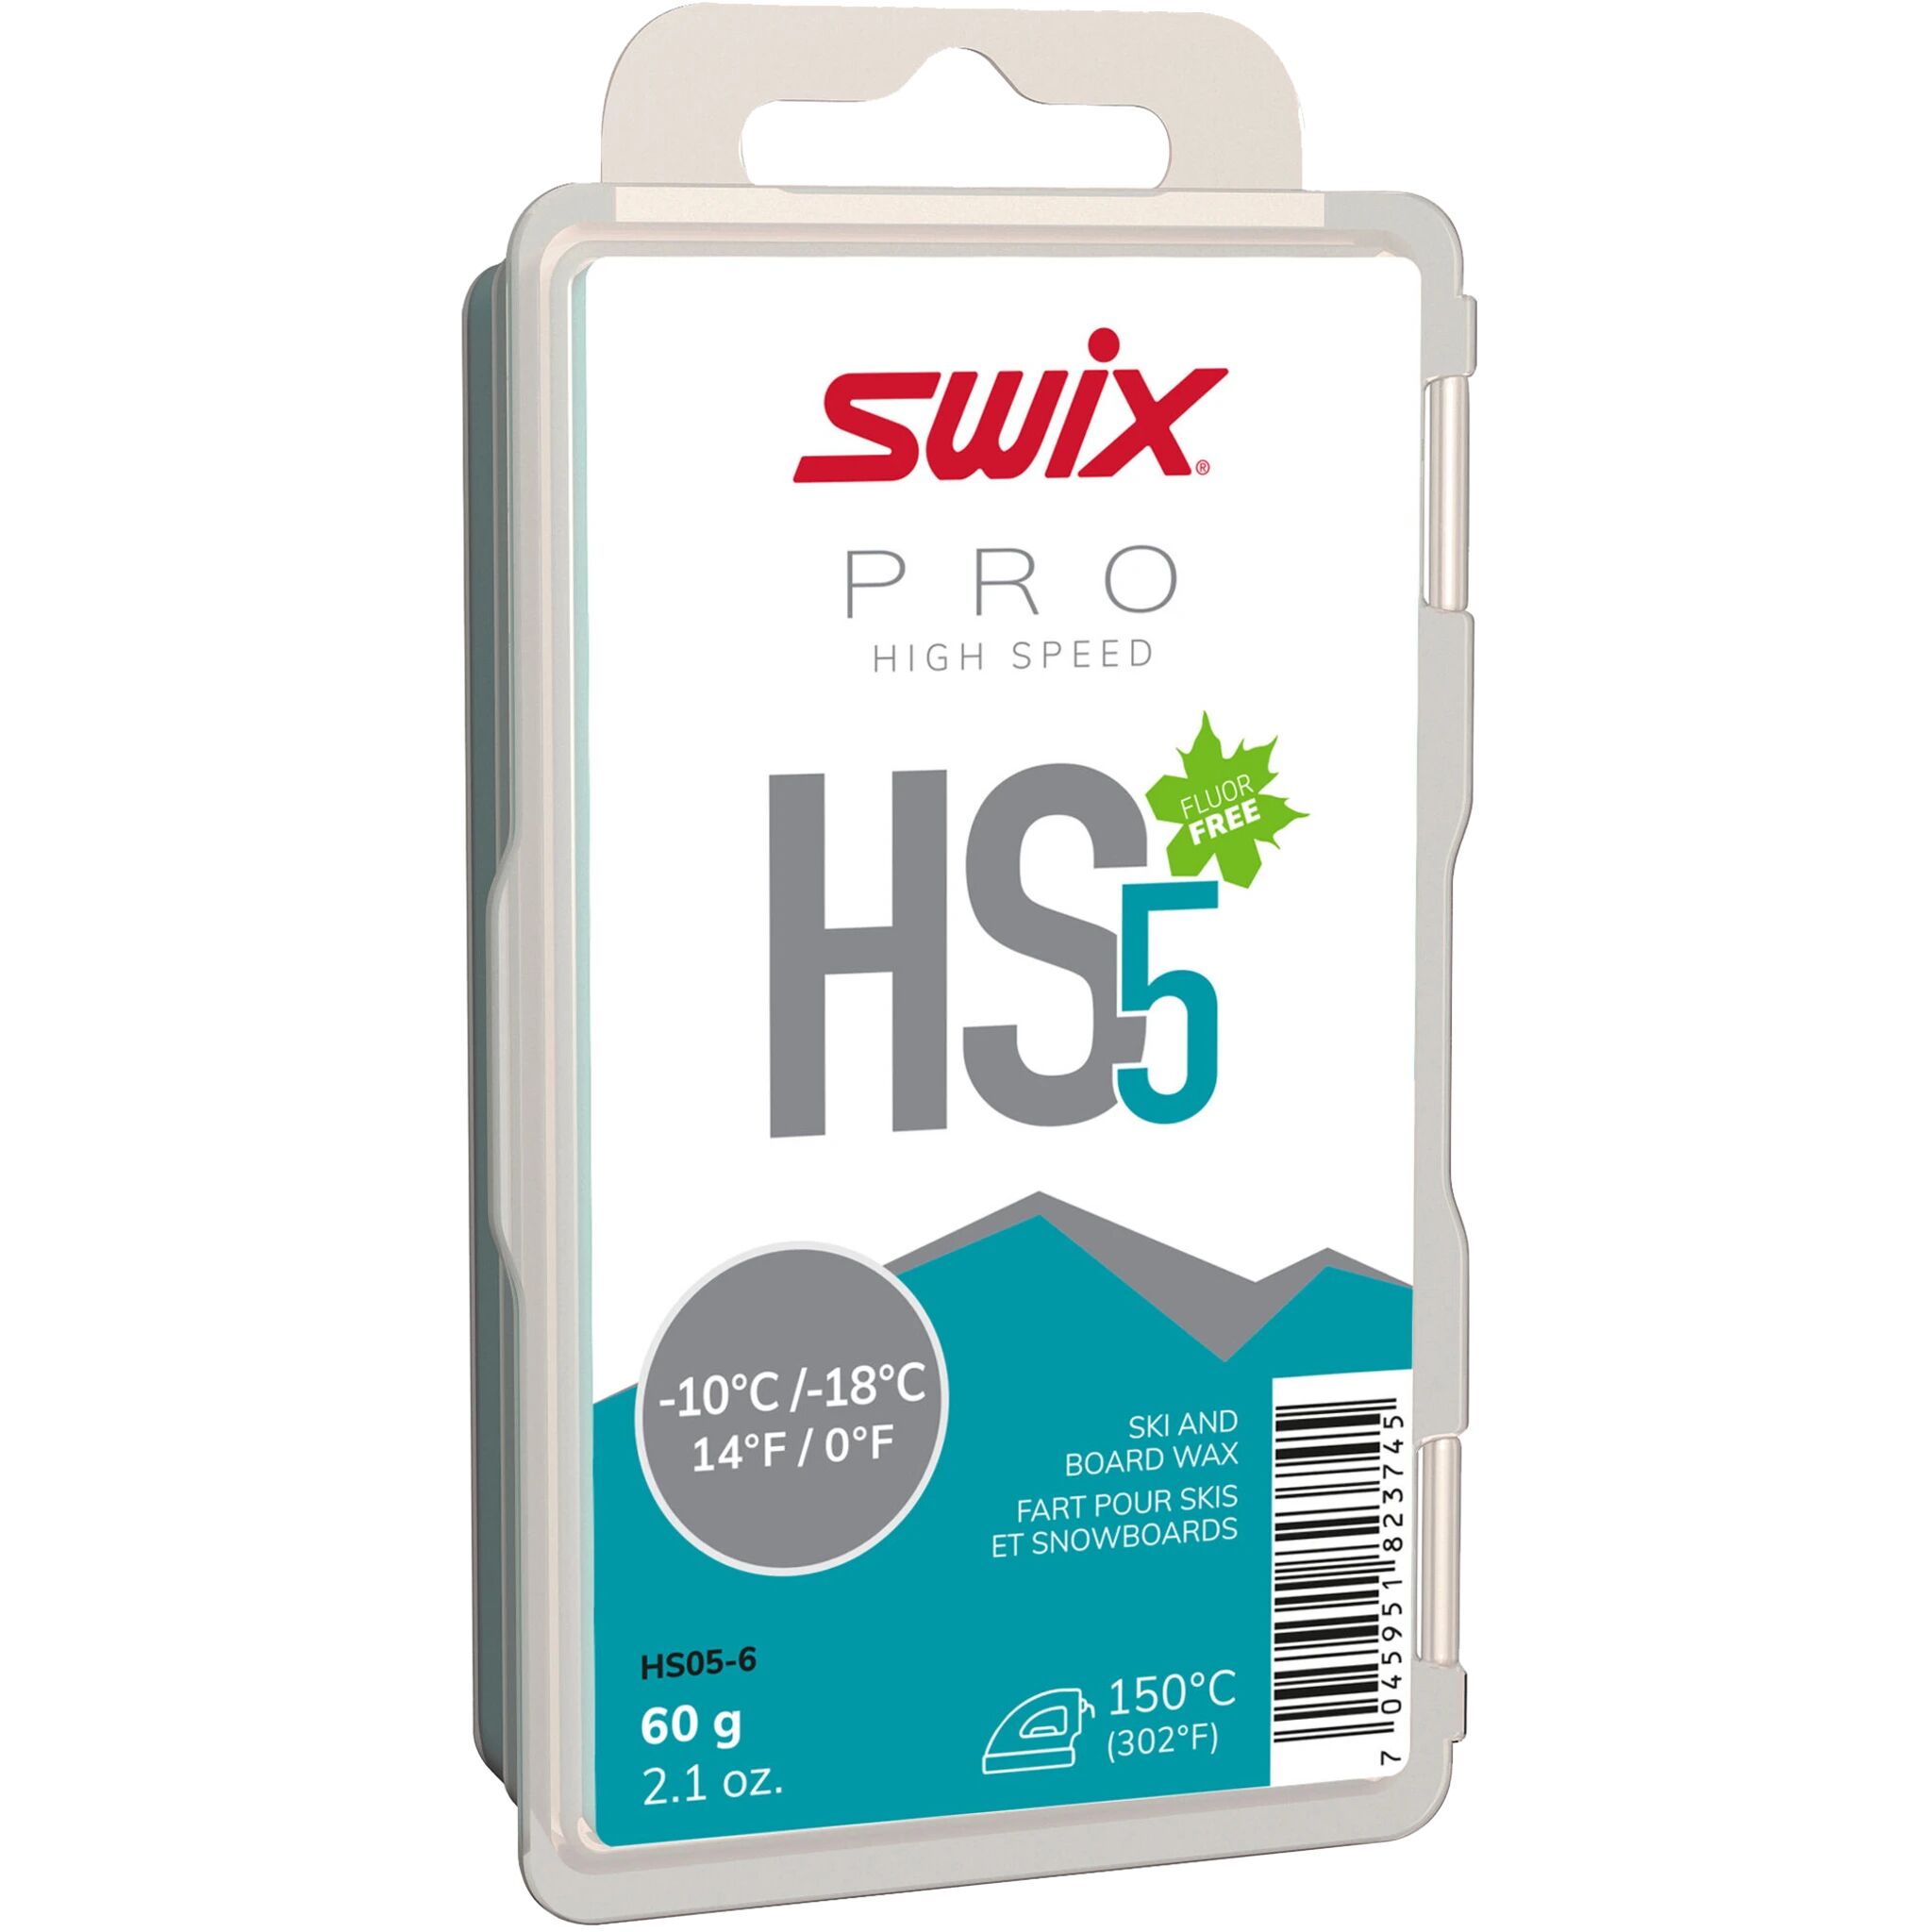 Swix HS5 Turquoise -10°C/-18°C 60g 20/21, glider 60g STD